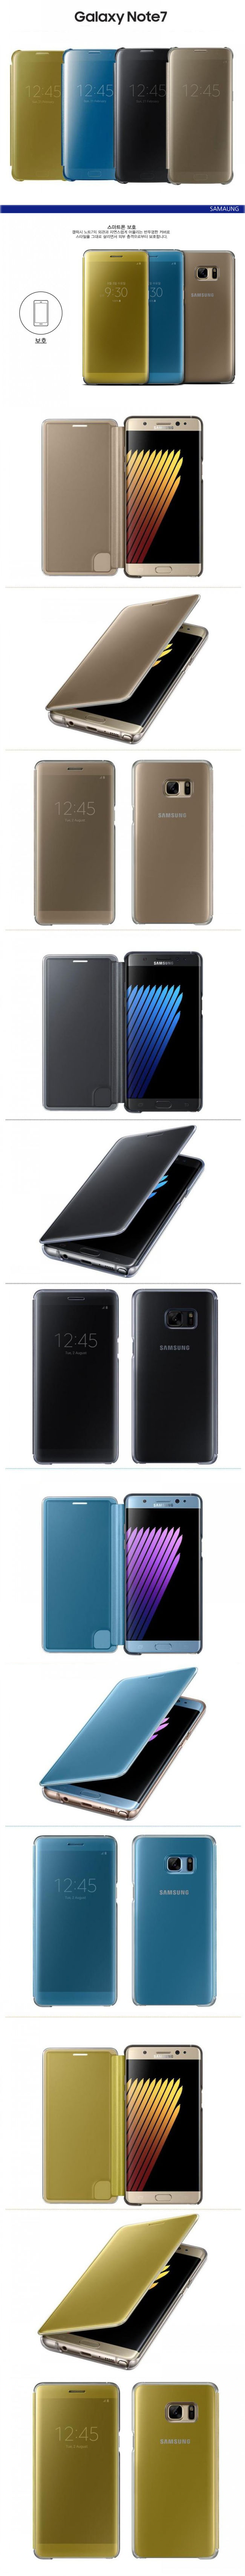 Bao da Note 7 Clear View chính hãng Samsung (Full Box) 33